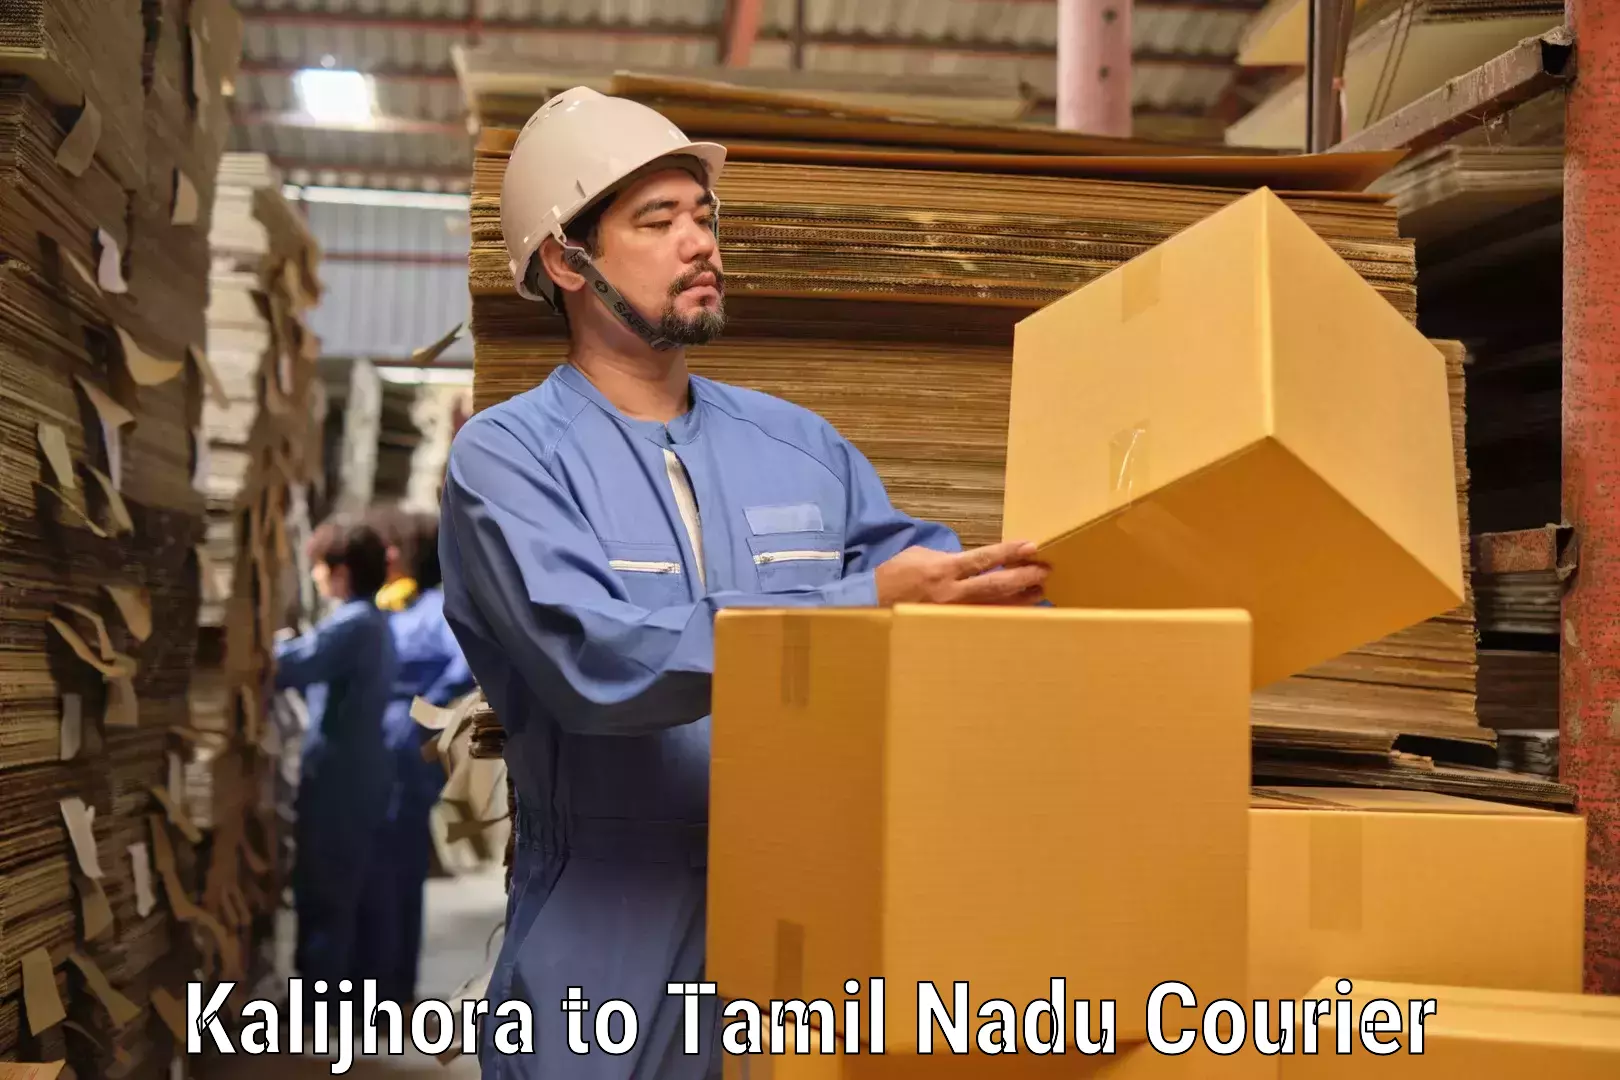 Courier service partnerships Kalijhora to Tamil Nadu